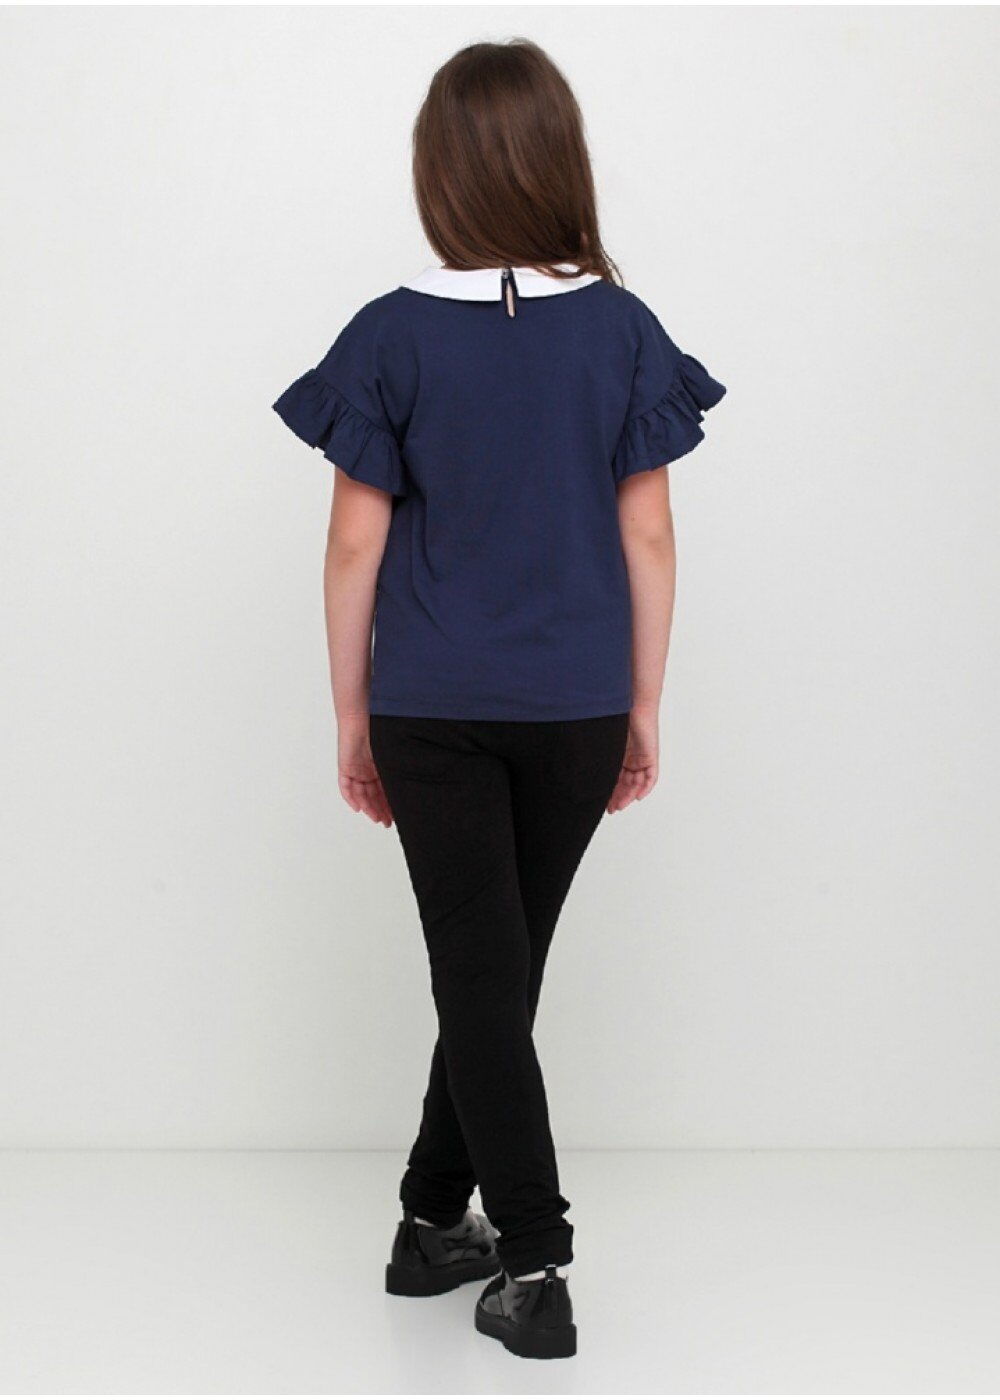 Трикотажная блузка для девочки Vidoli синяя 19592 - фото